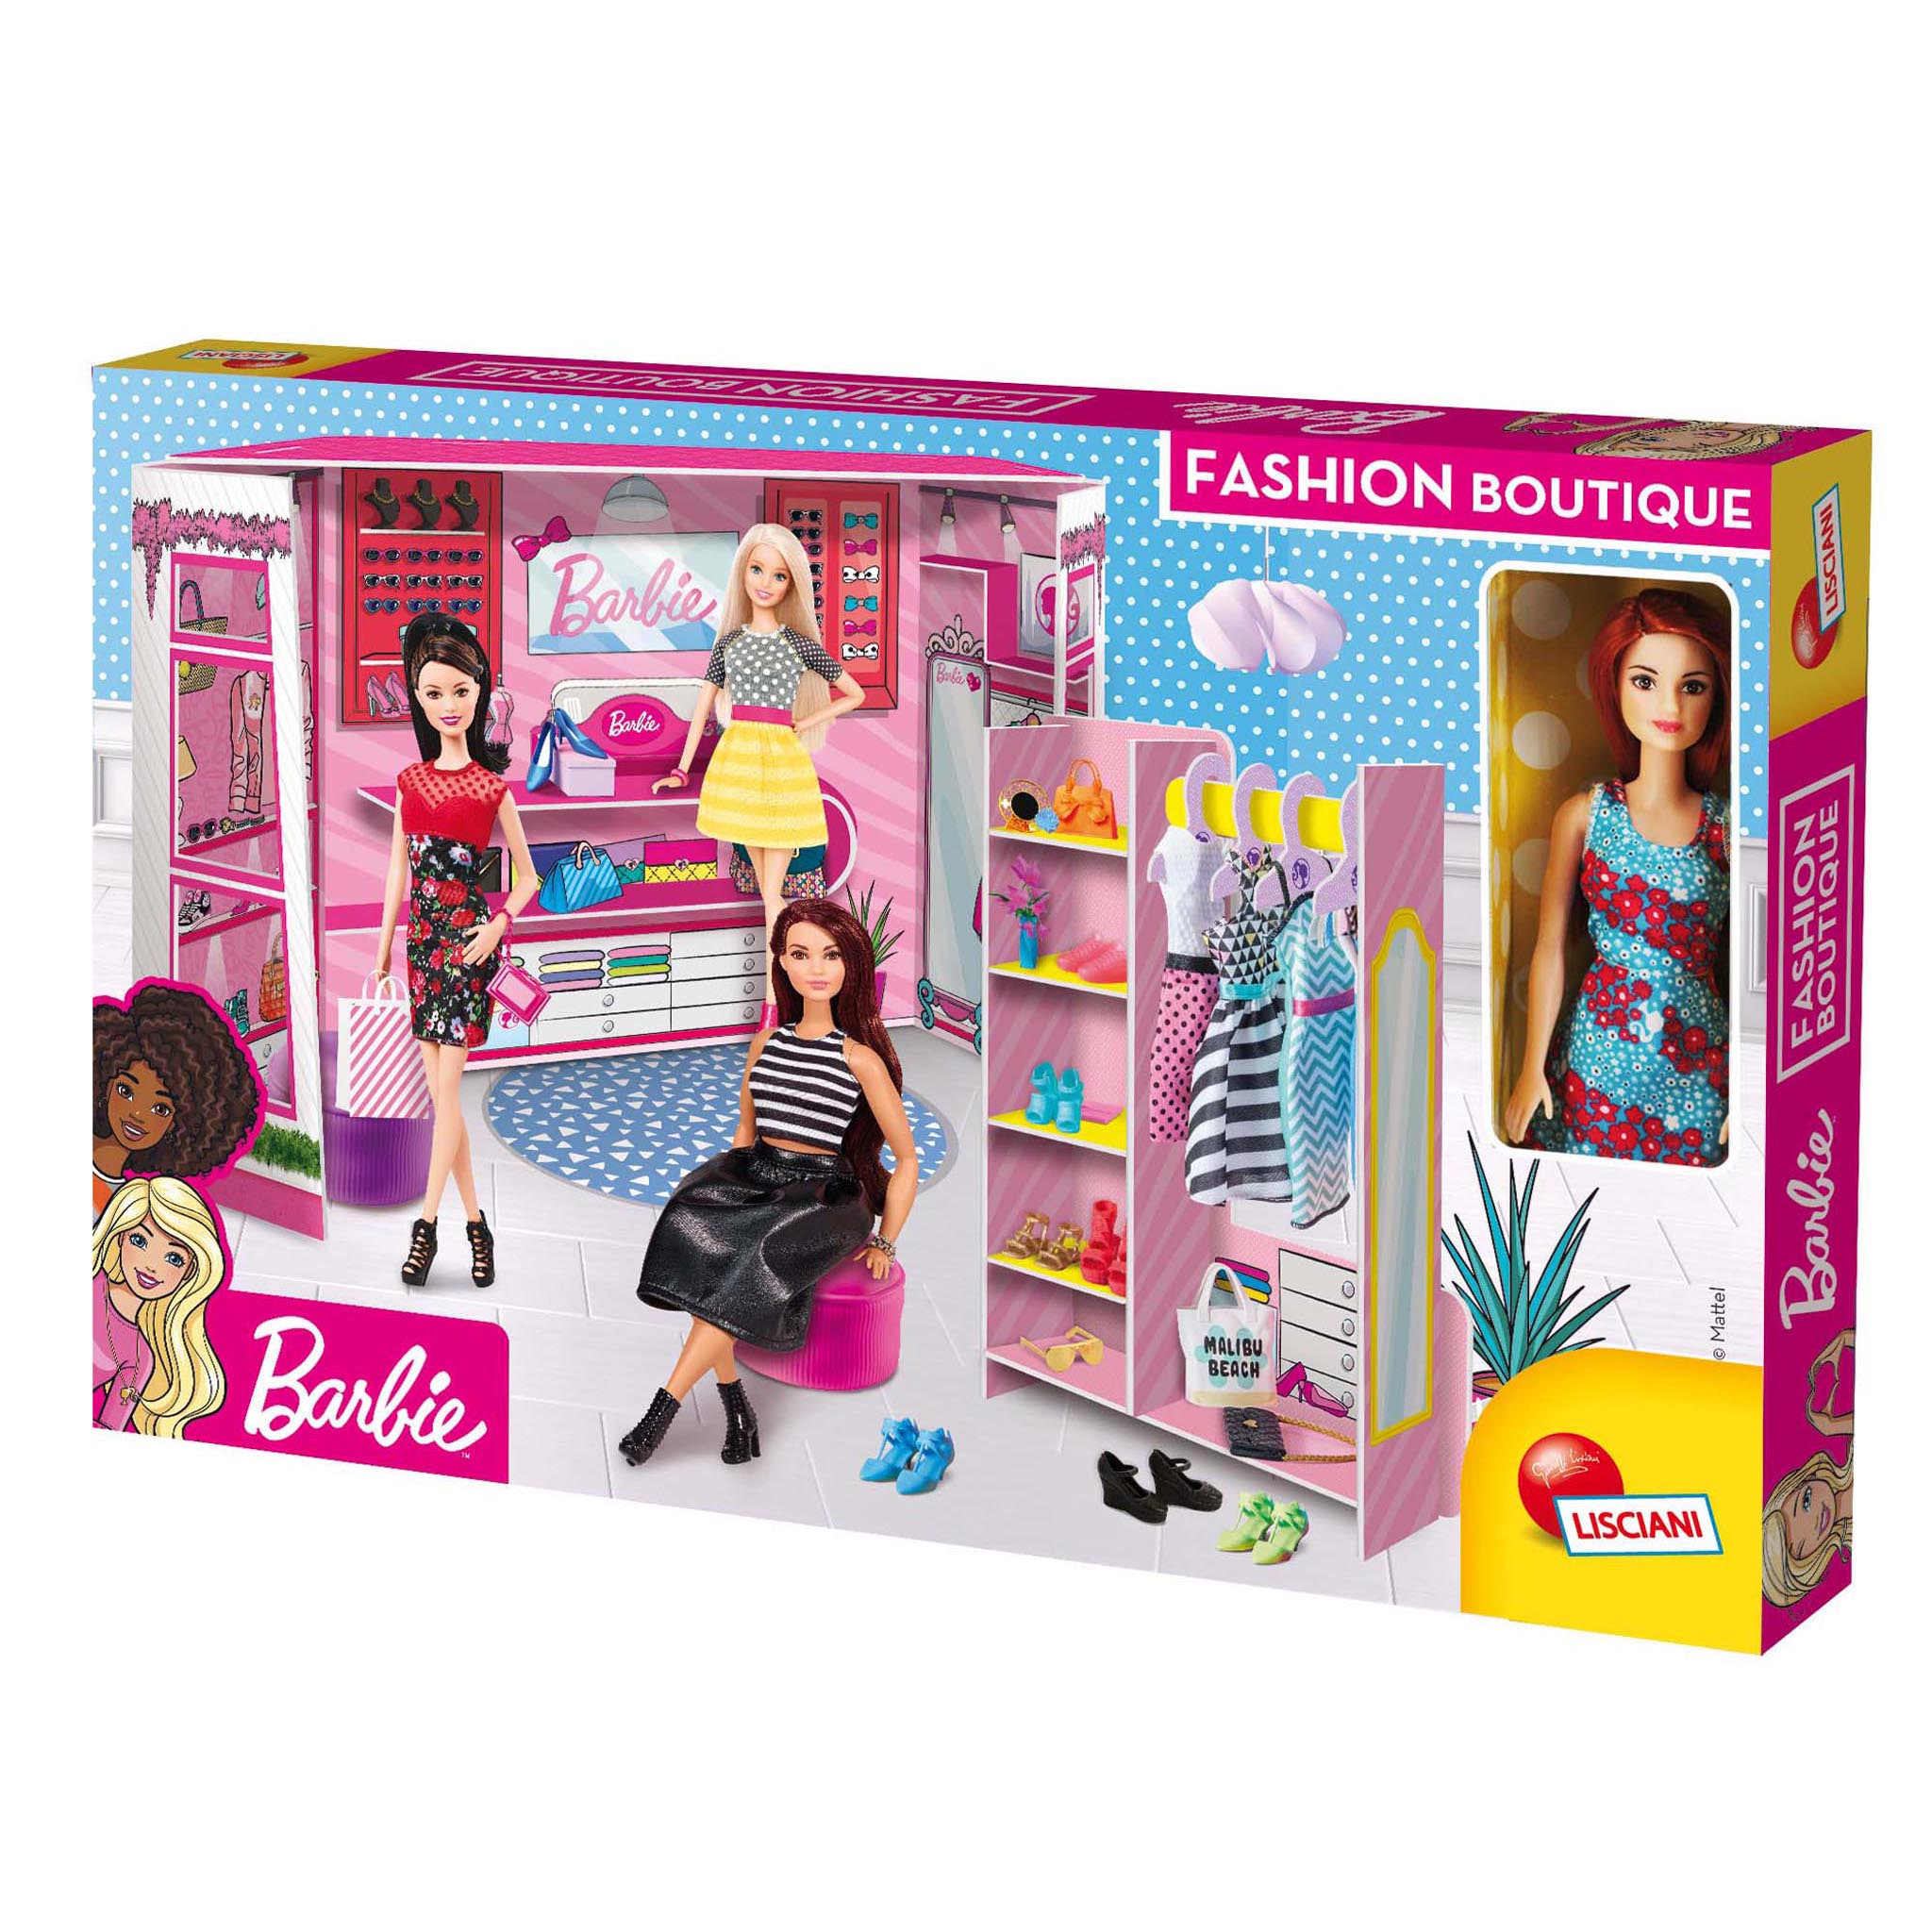 Большой набор кукол. Barbie Fashion Boutique набор. Barbie модный бутик с куклой Барби. Игровой набор Barbie Fashion Boutique. Набор Lisciani Barbie модный бутик с куклой 76918.